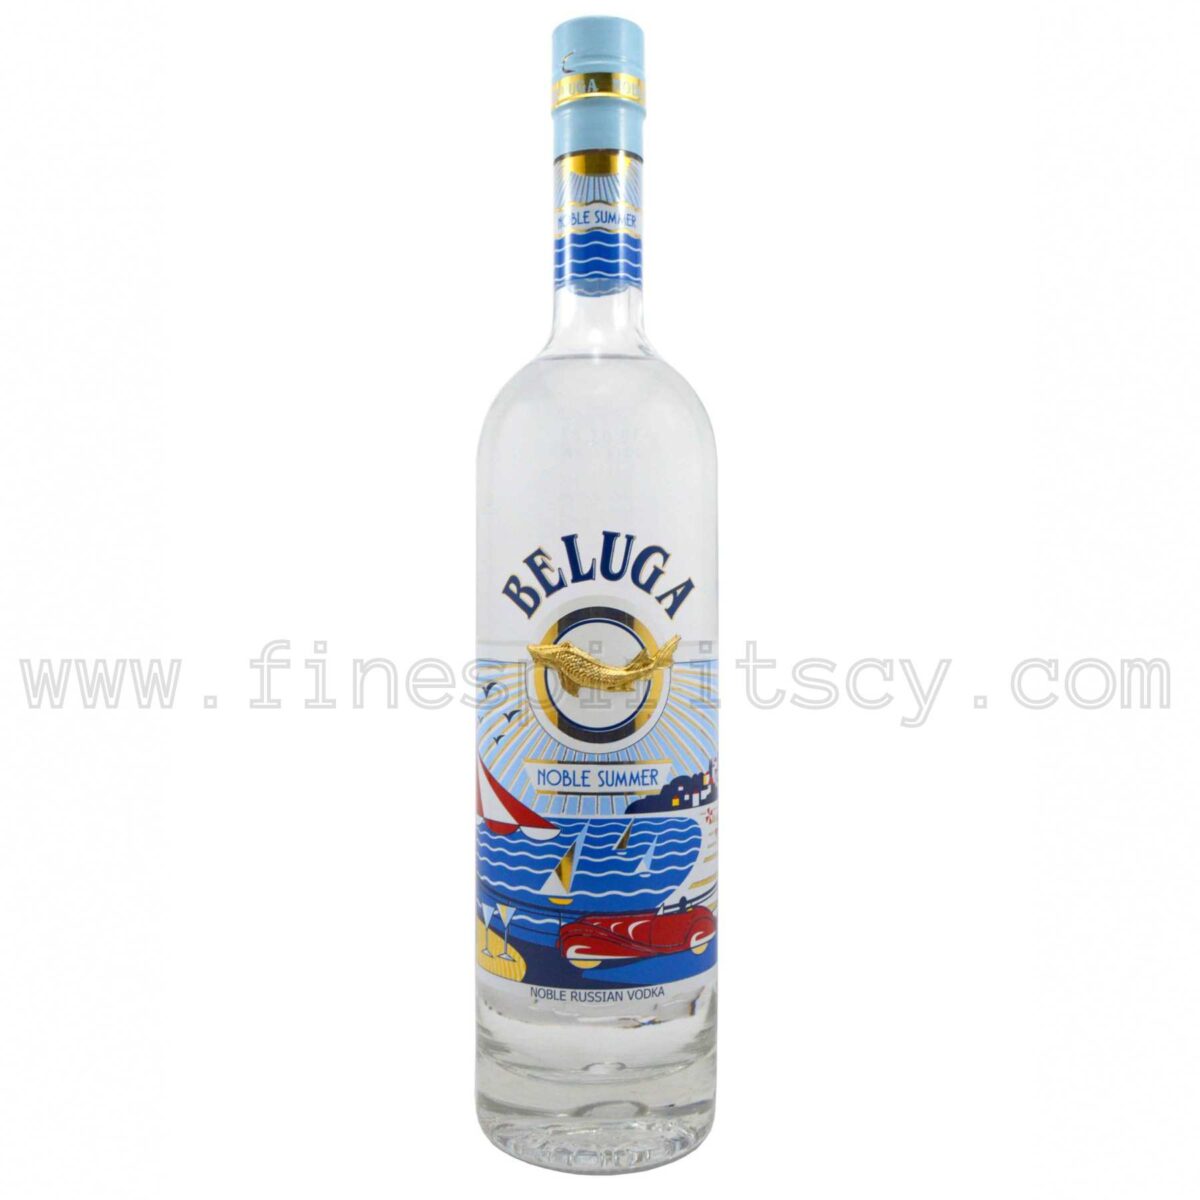 Beluga Noble Summer CY Cyprus Vodka Russia 70cl 700ml Russian Price 0.7L